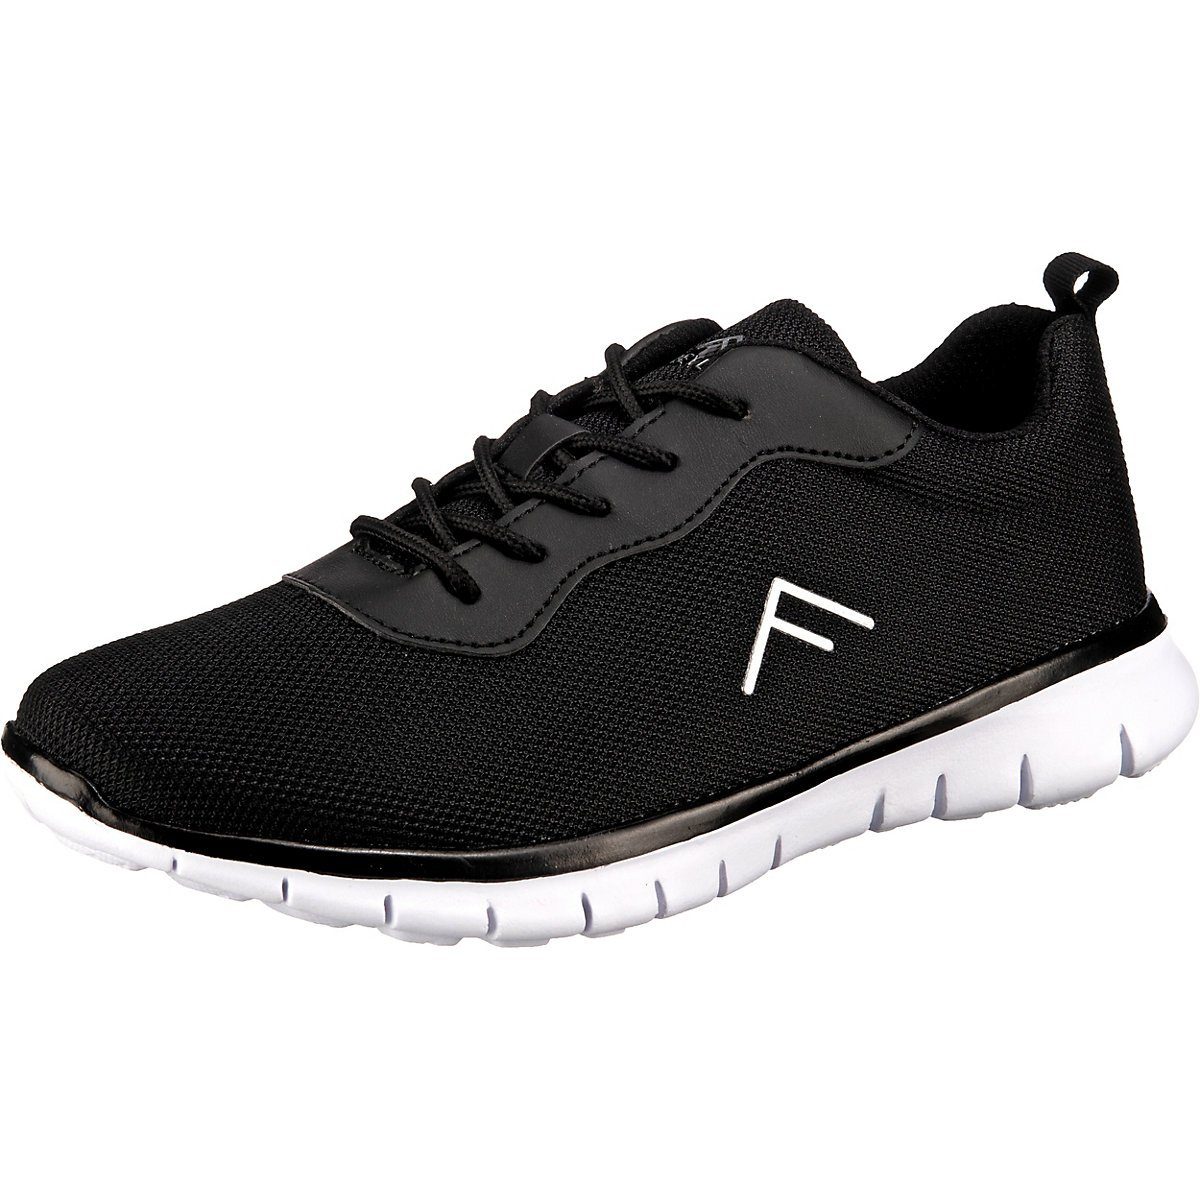 Schuhe Sneaker Freyling Frey-mesh Sneakers bulky, enhanced step Sneaker